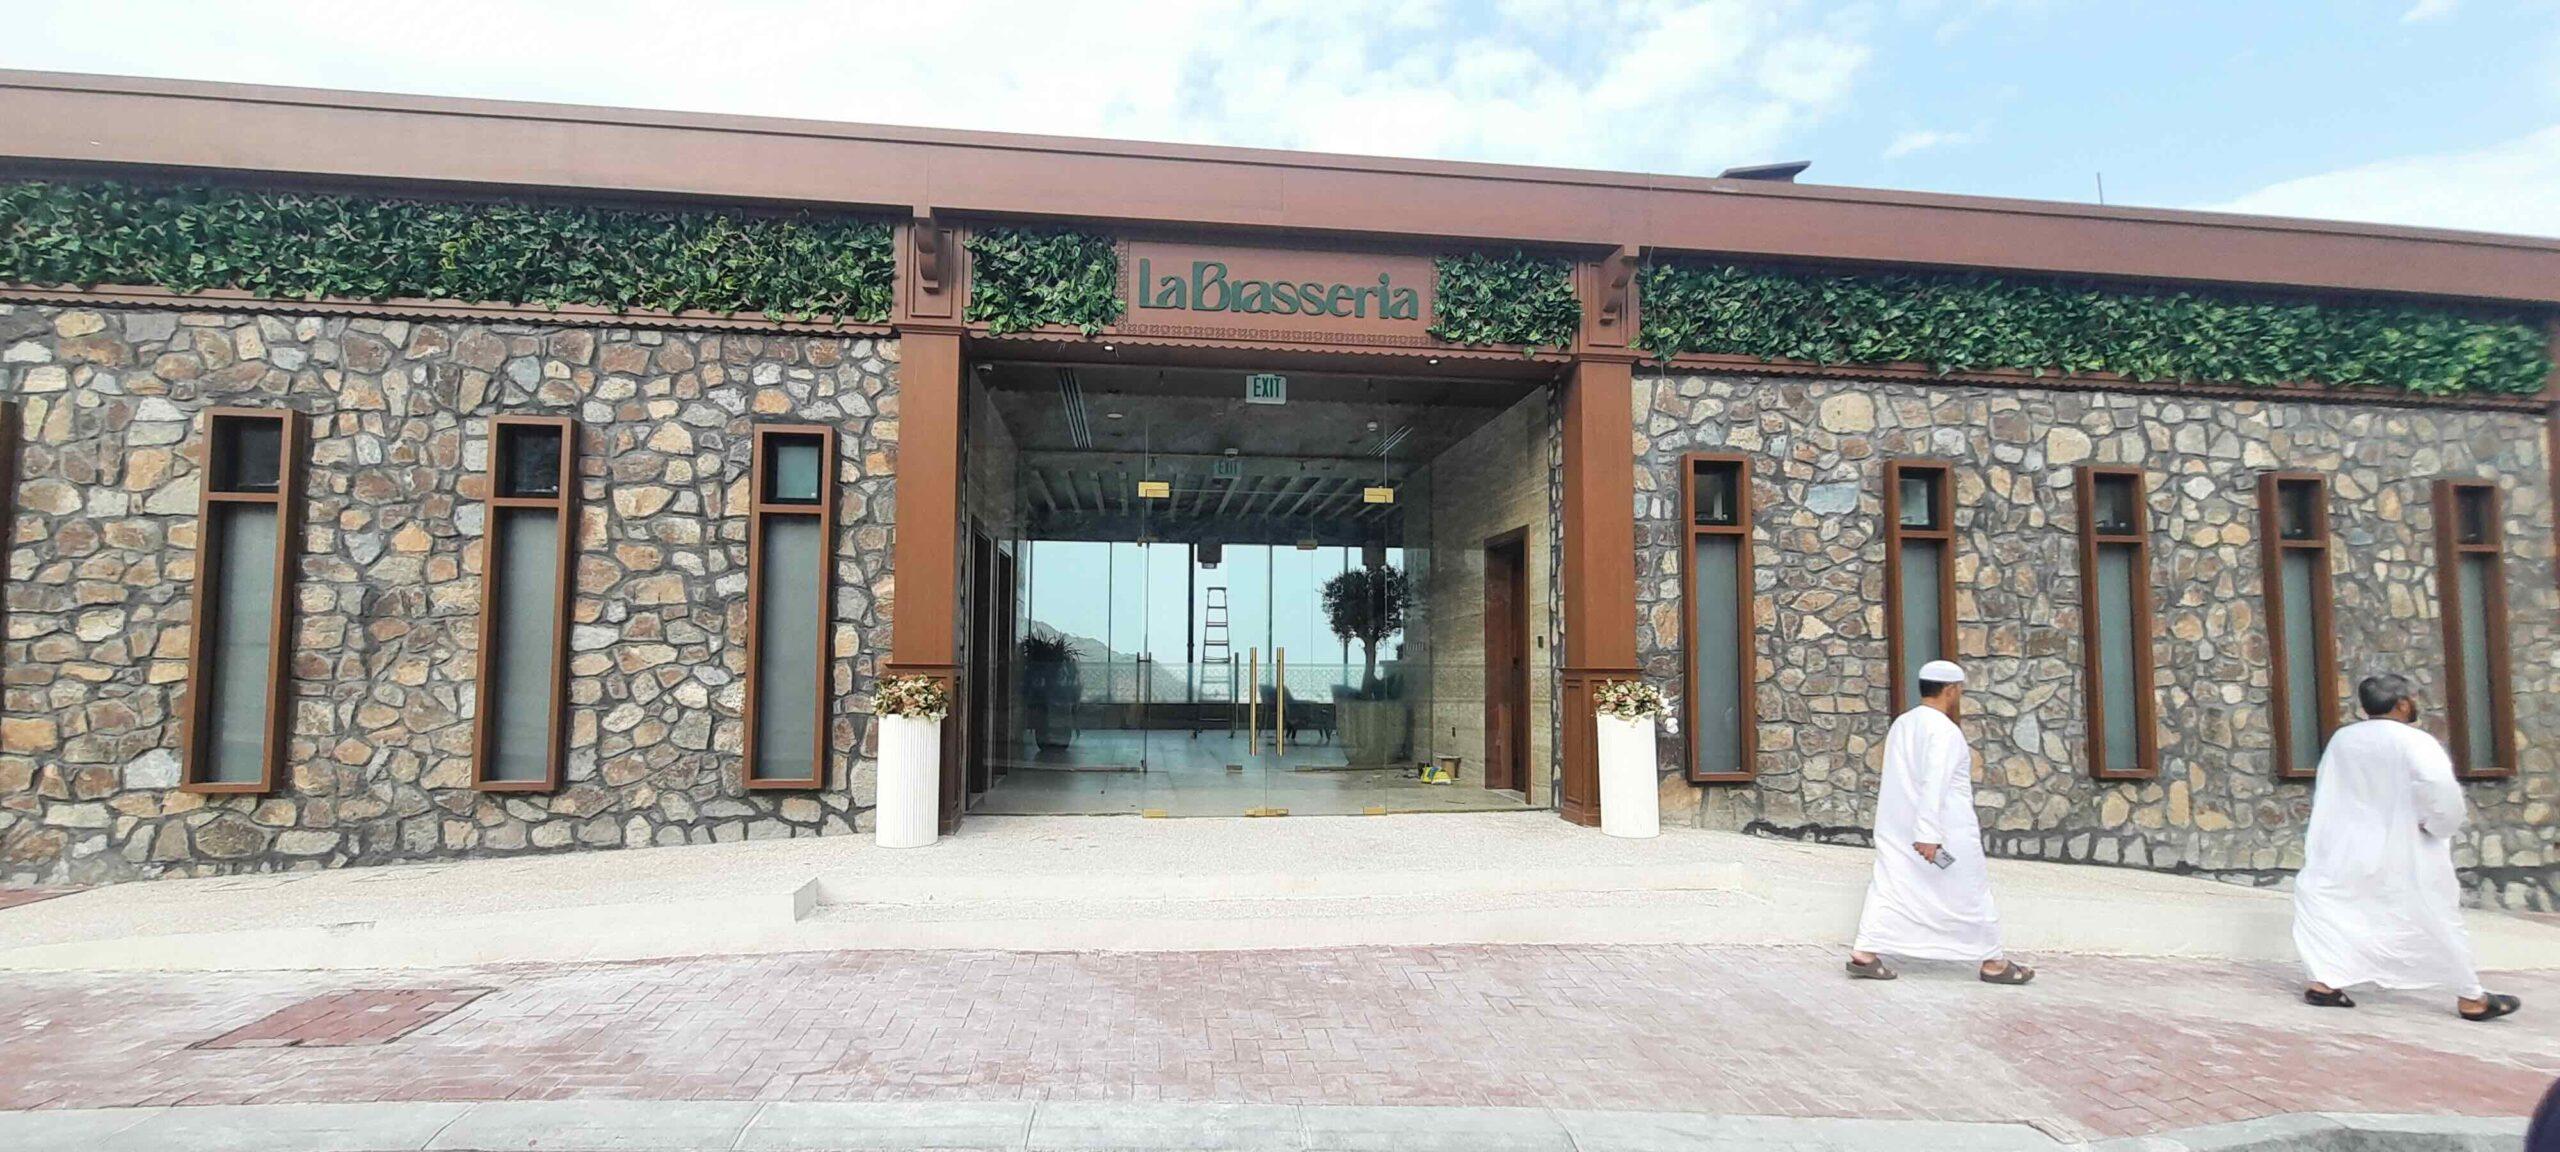 La Brasseria Bistro opens in Sharjah’s mountainous Hanging Gardens 